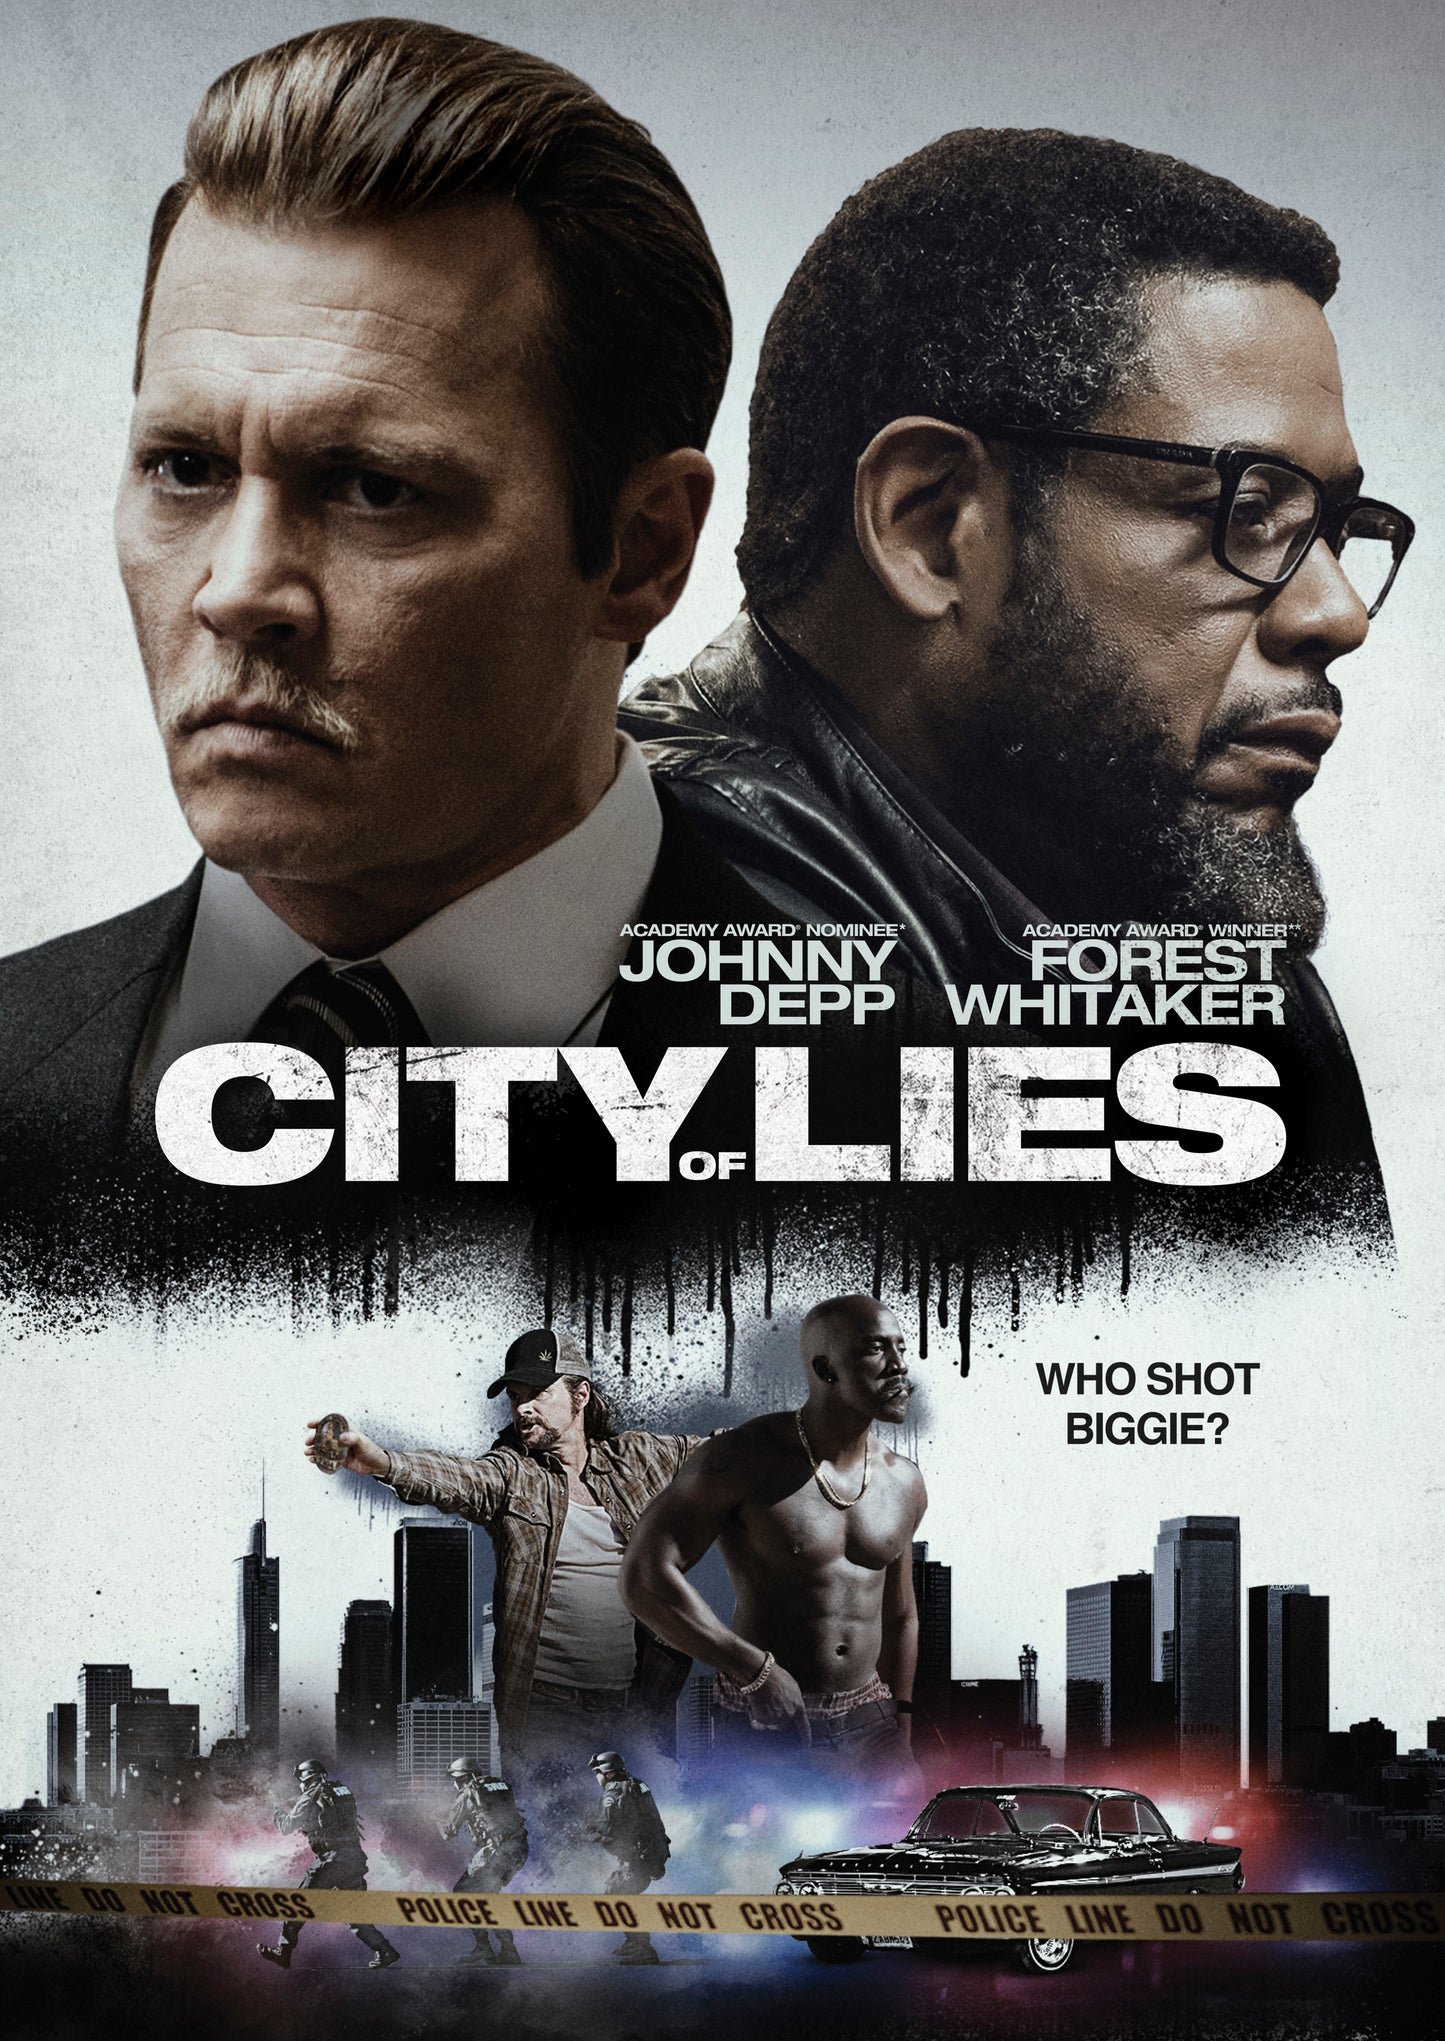 City of Lies cover art